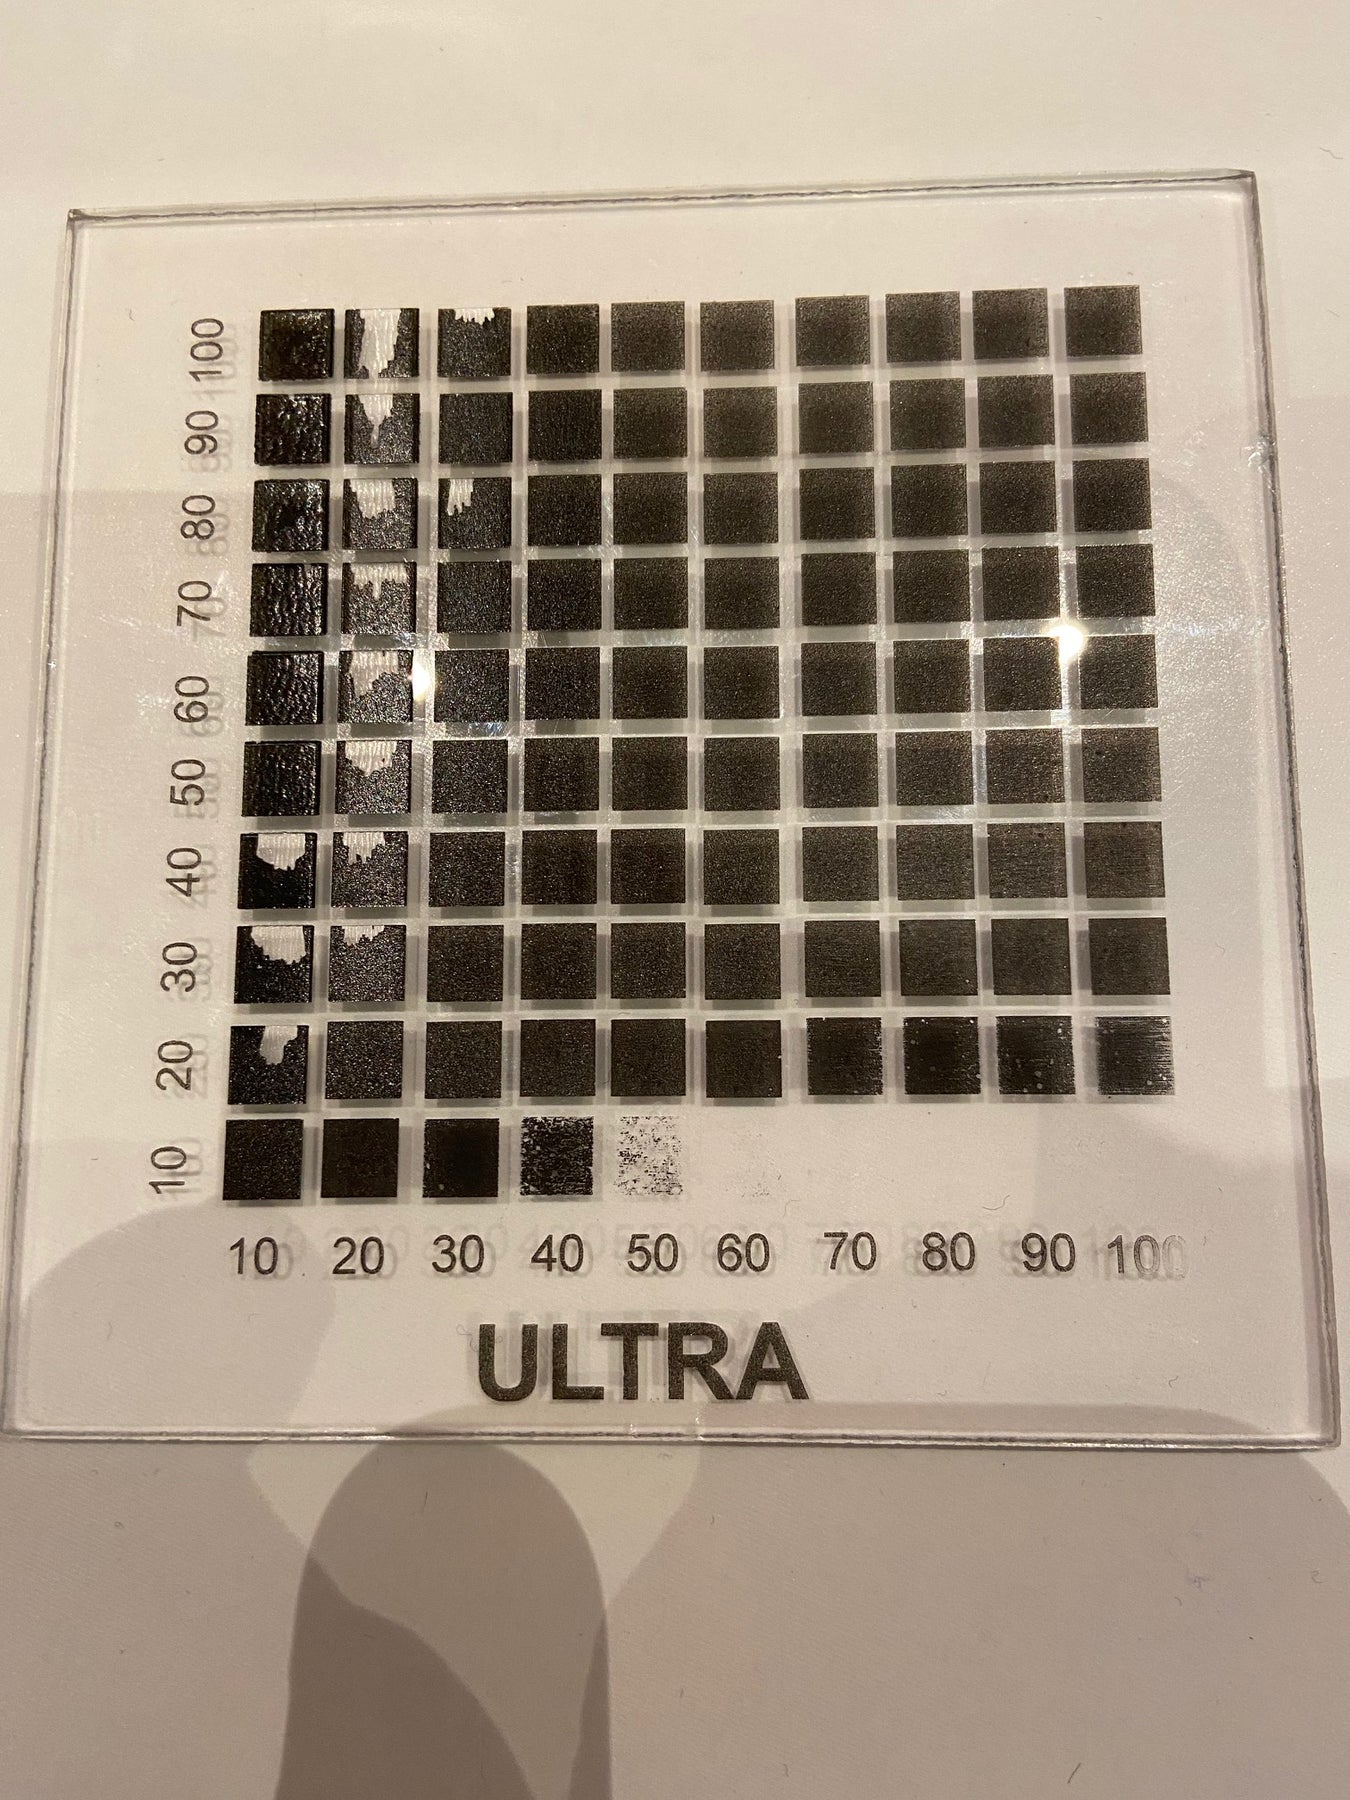 CERMARK ULTRA black Lasermarking spray 2oz (57gr)